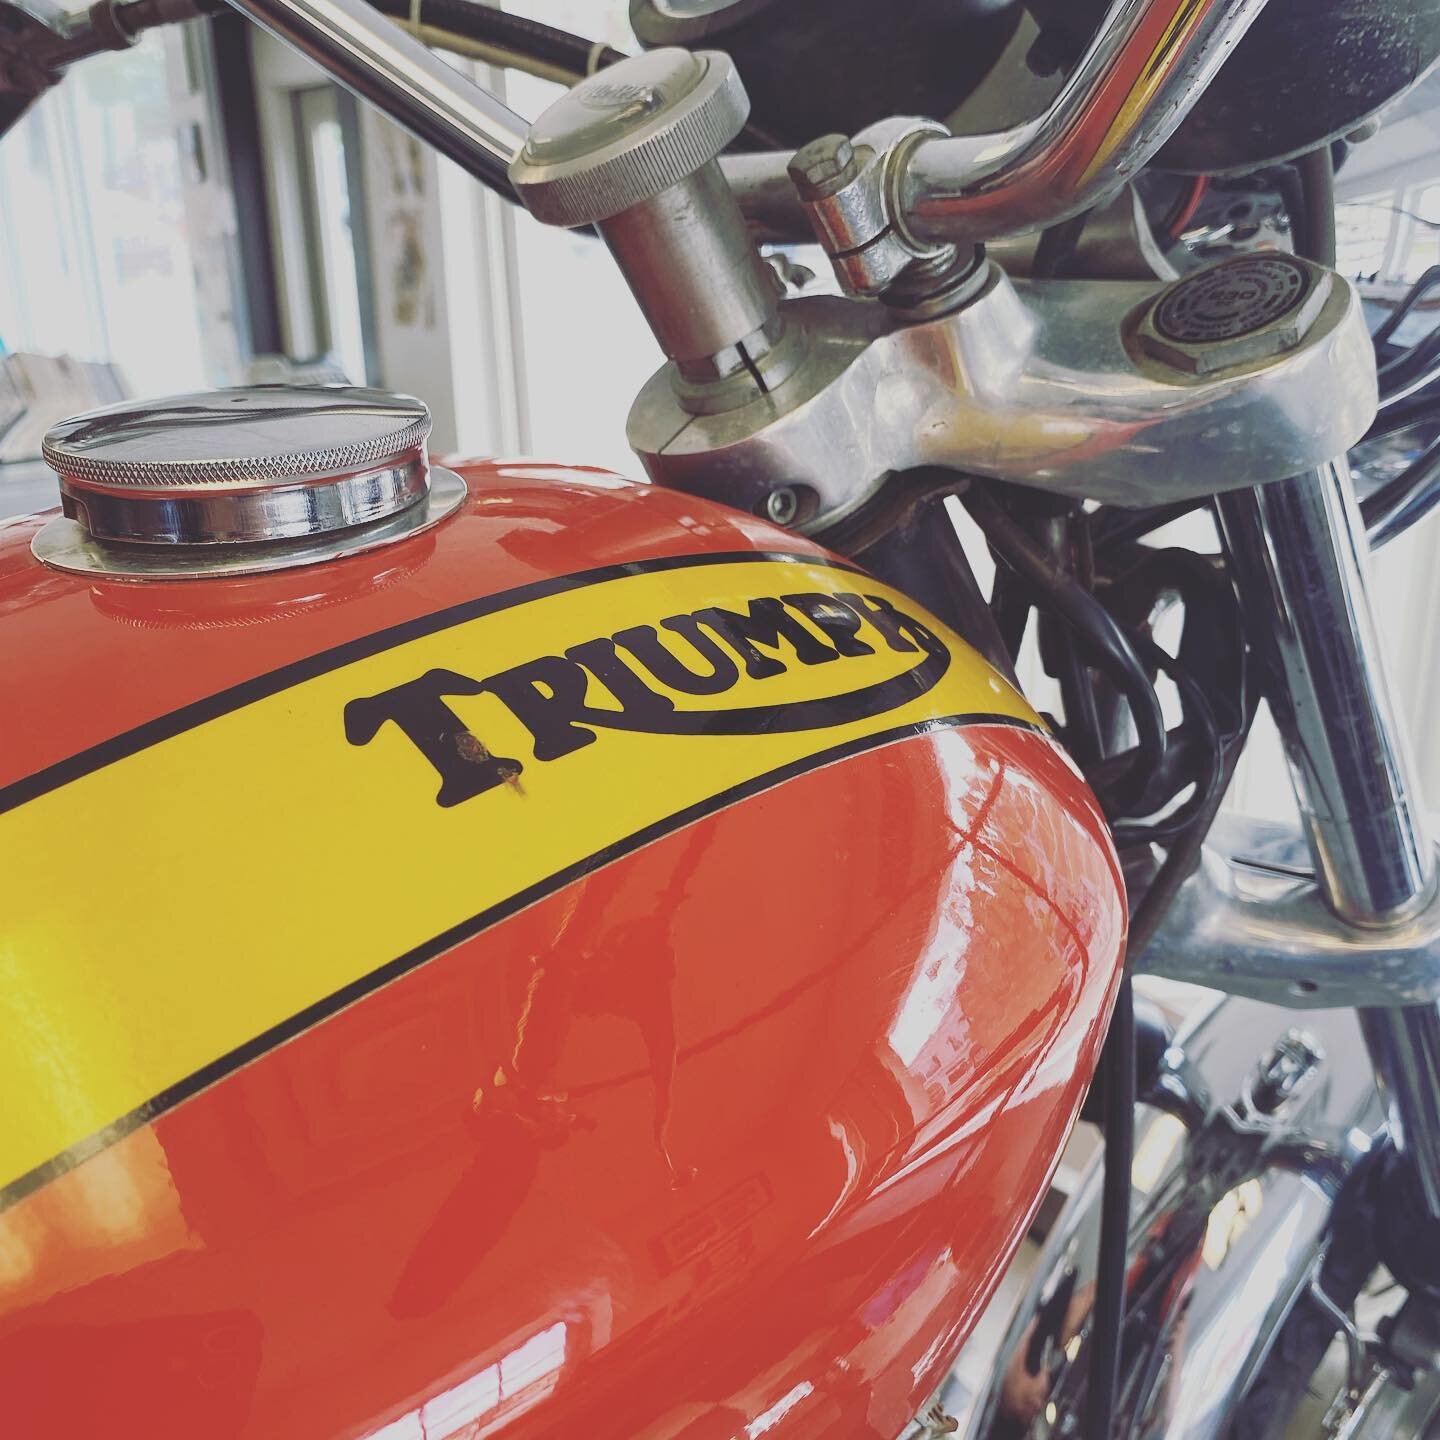 Triumph Hurricane.
Always nice on the eyes!
#triumphhurricane #vintagetriumphmotorcycle #vintagetriumph #1973